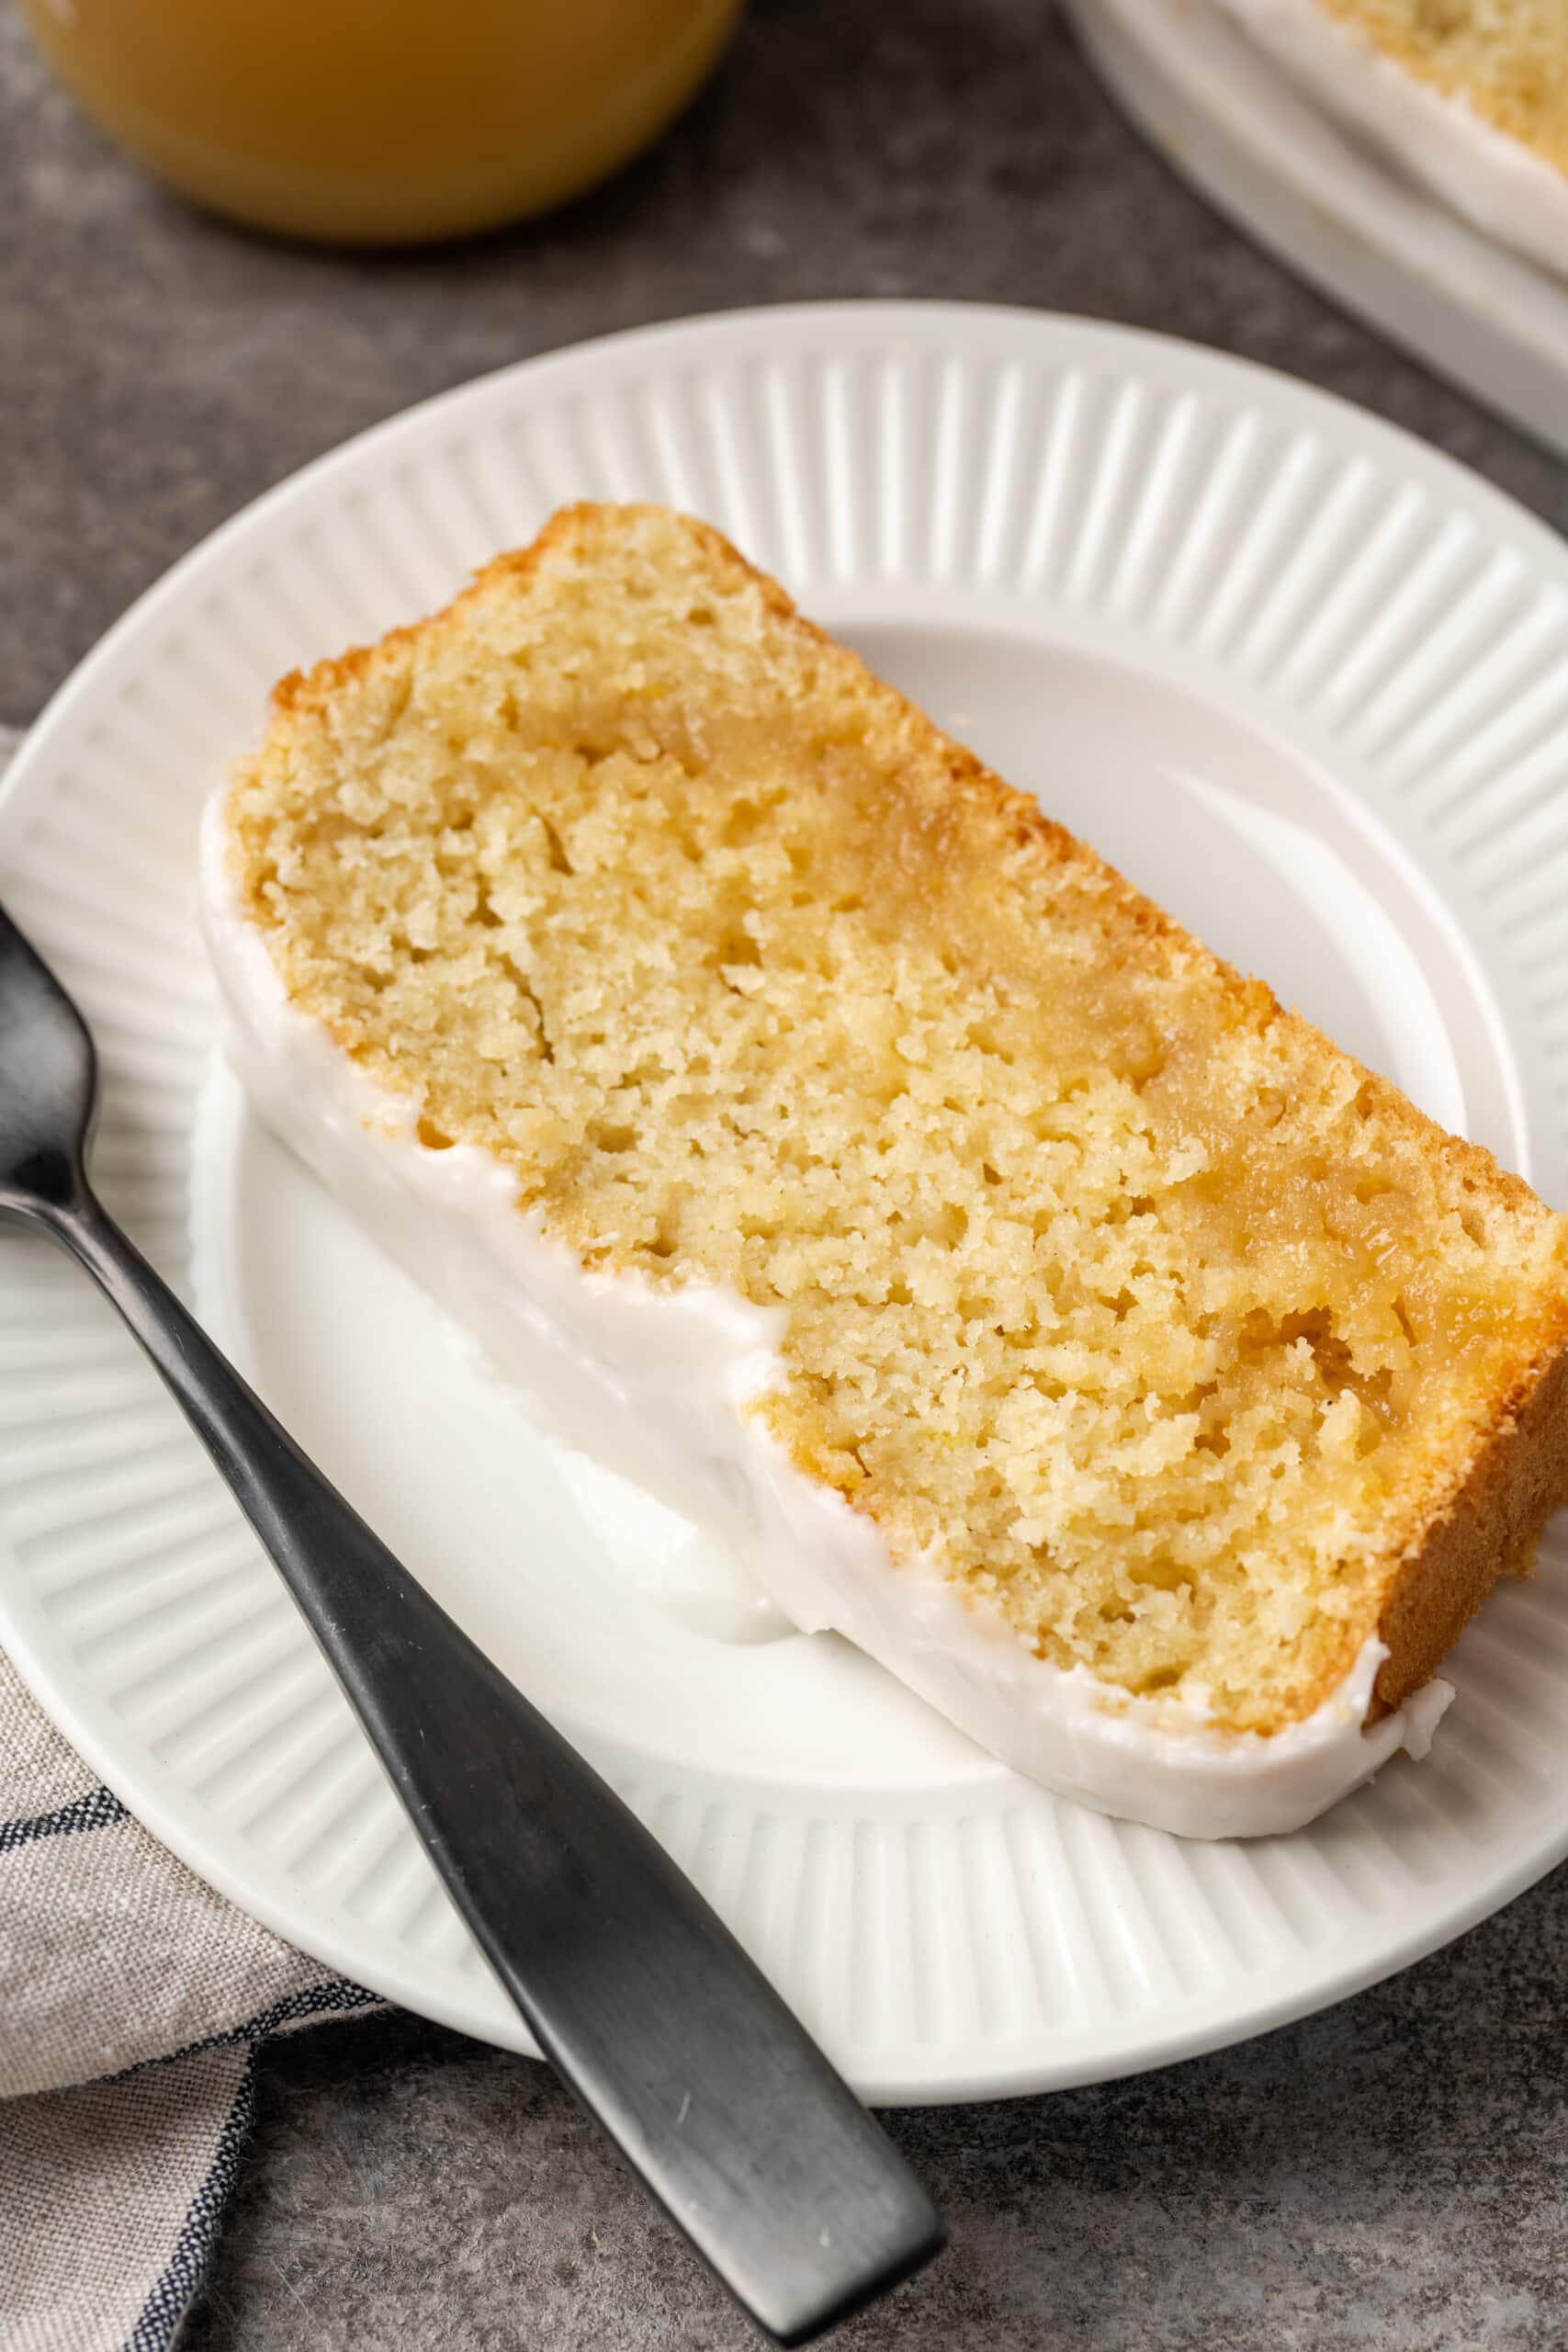 A slice of glazed lemon pound cake on a white plate next to a fork.